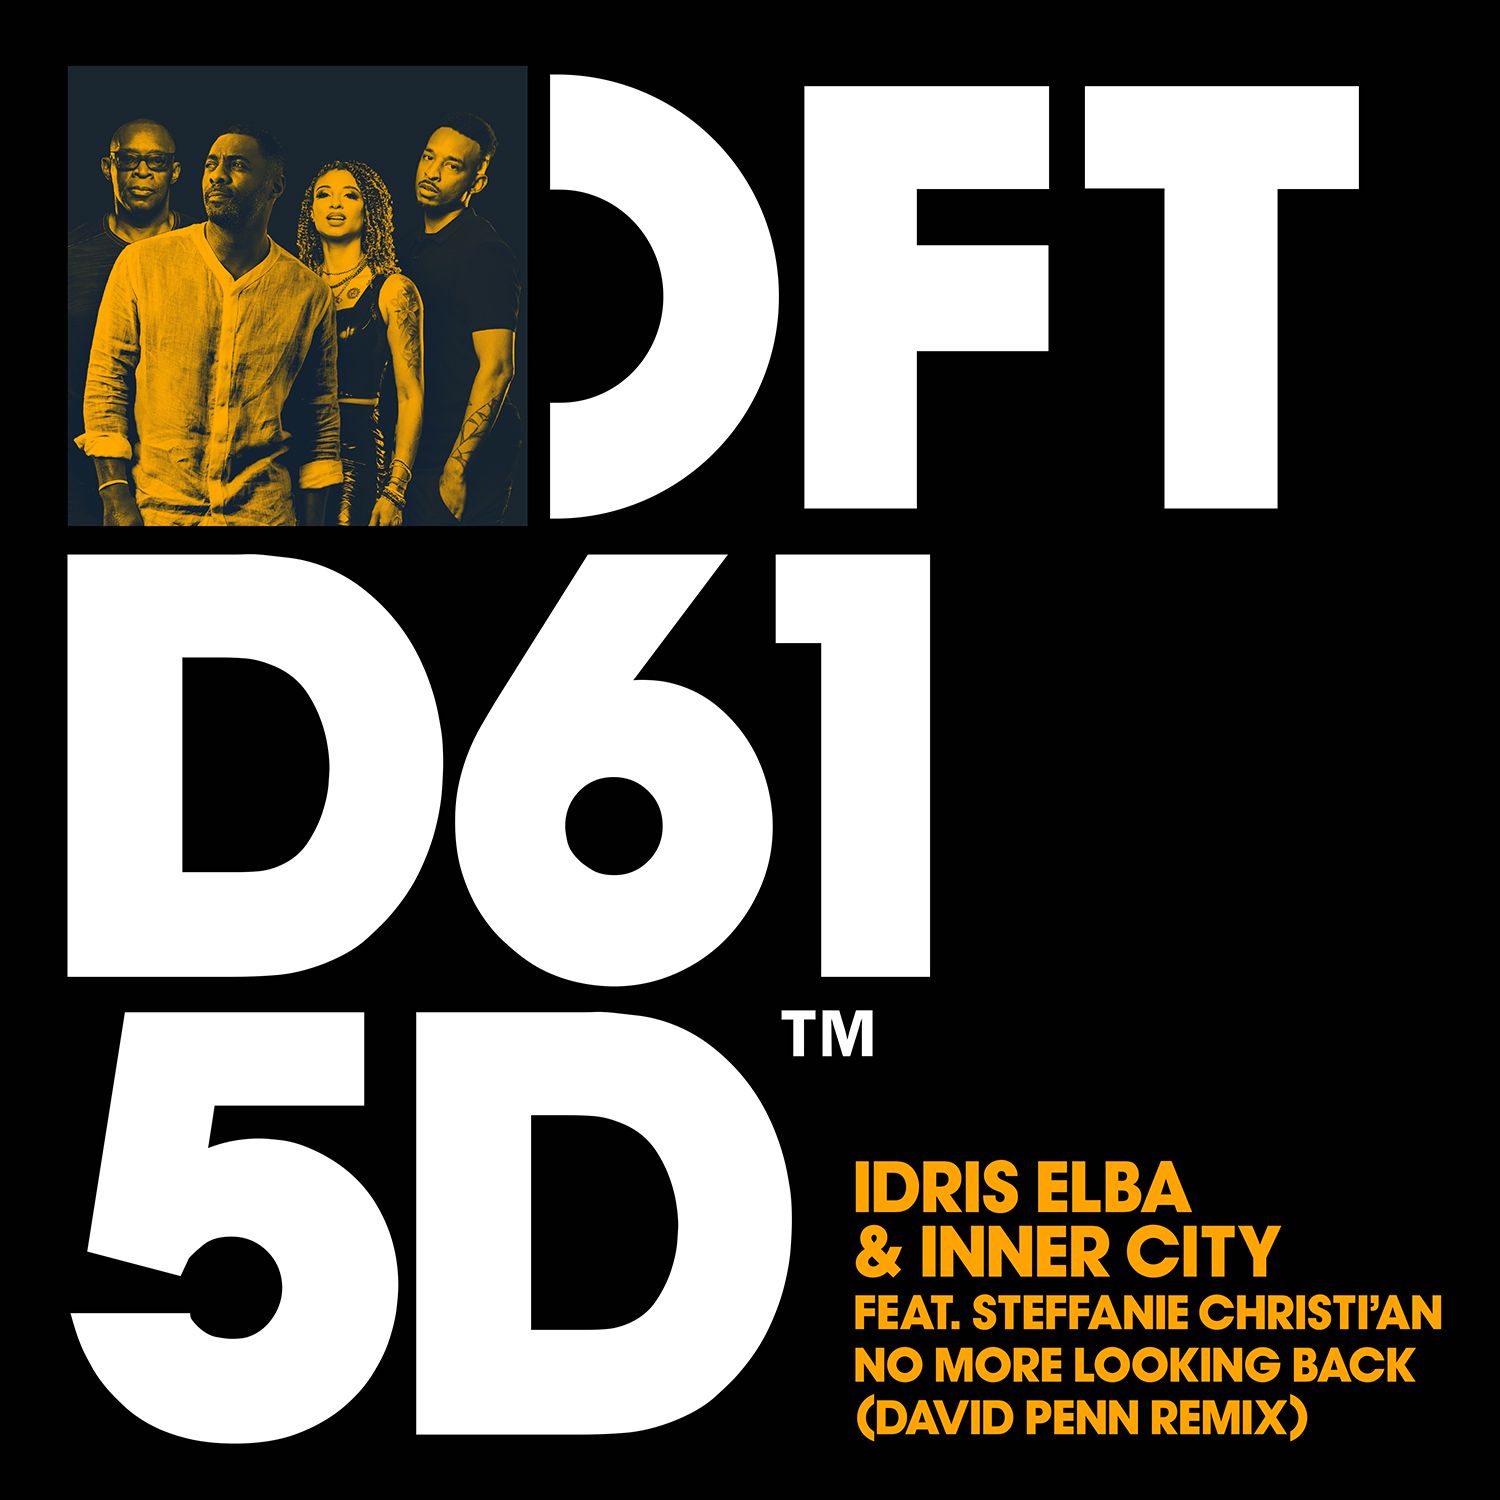 Idris Elba & Inner City 'No More Looking Back (David Penn Remix)' - Out 06/08/21